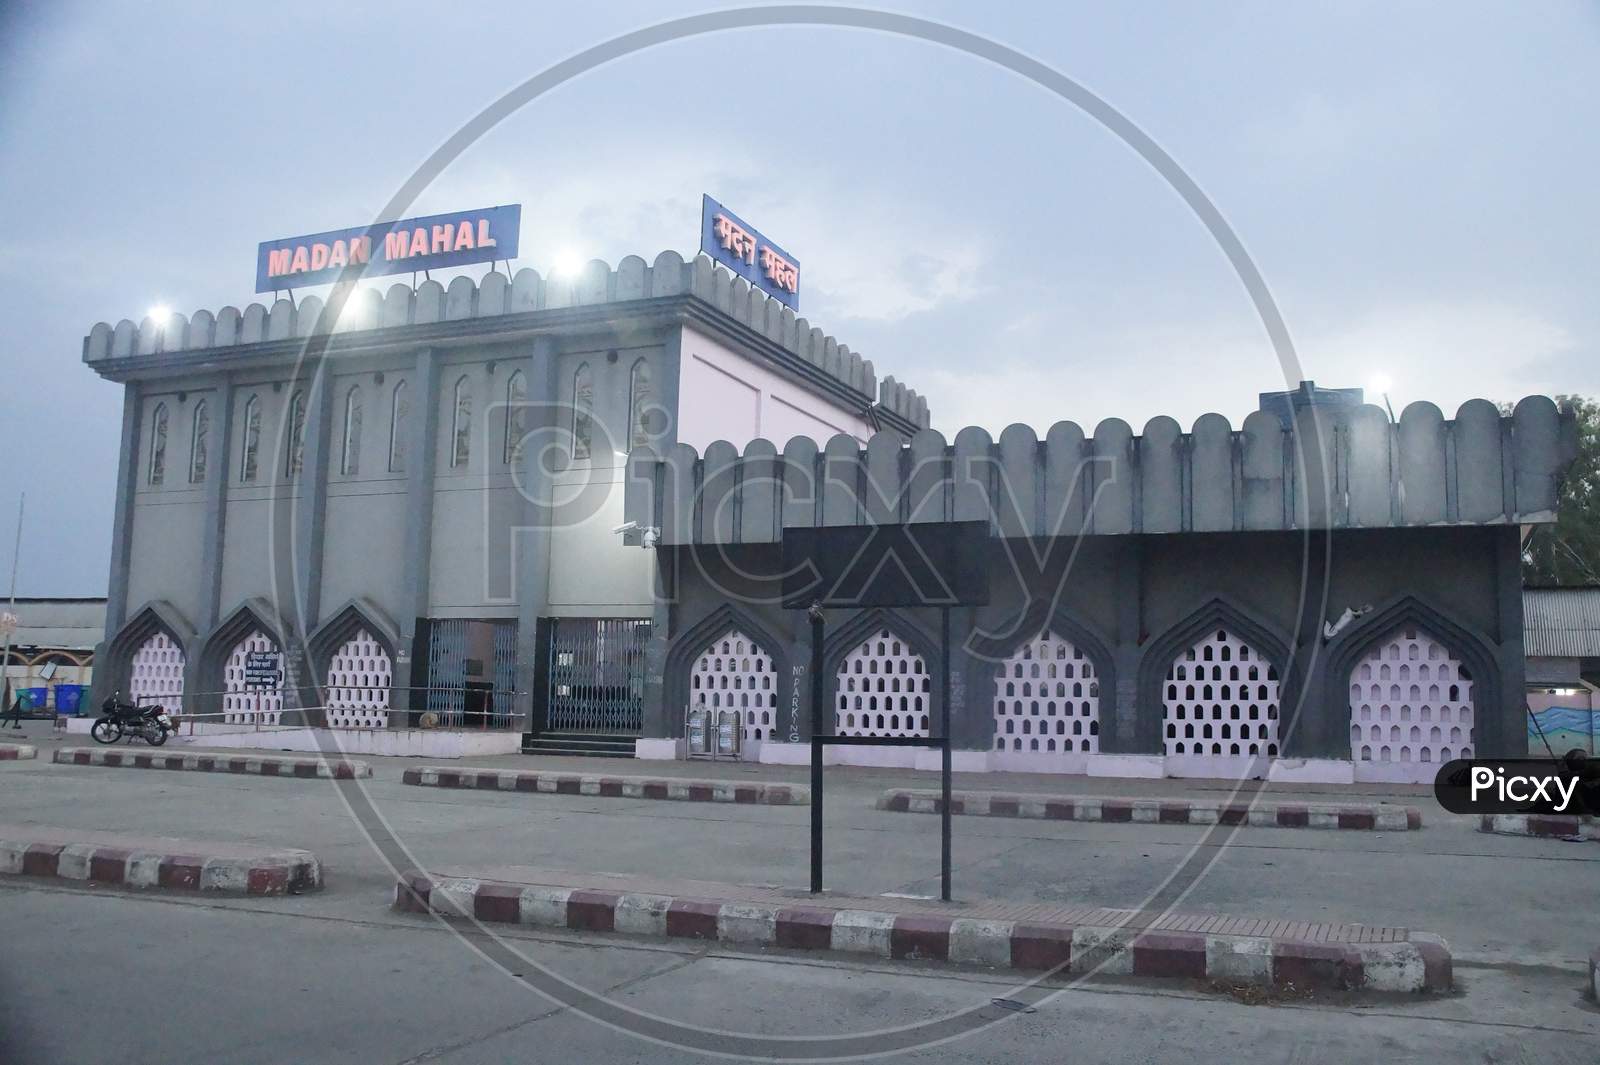 Madhya Pradesh's first Pink Railway Station- Madan Mahal